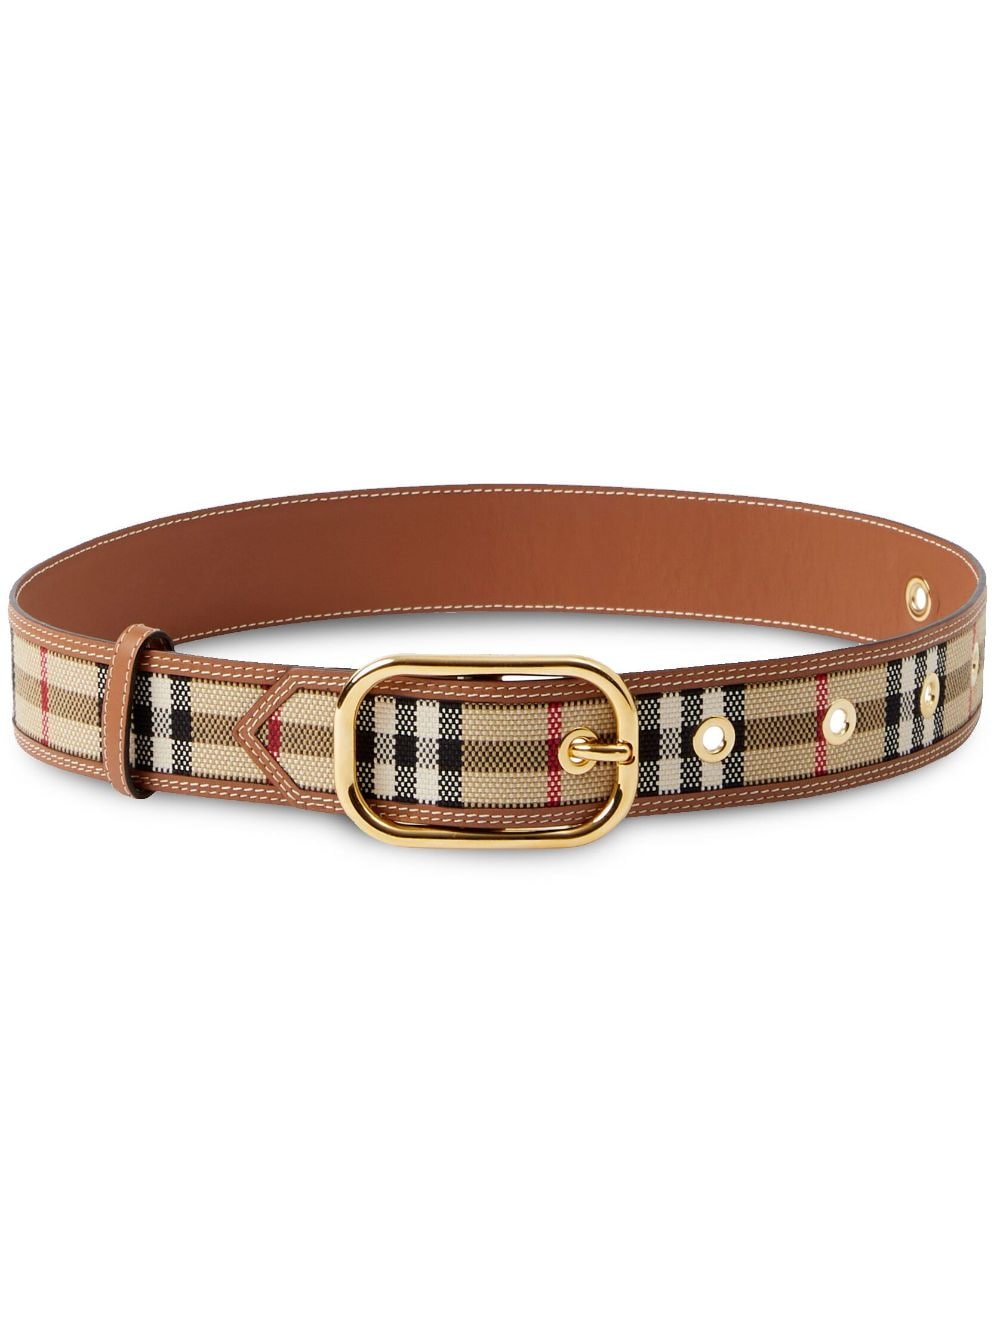 Burberry Vintage Check leather belt - Brown von Burberry